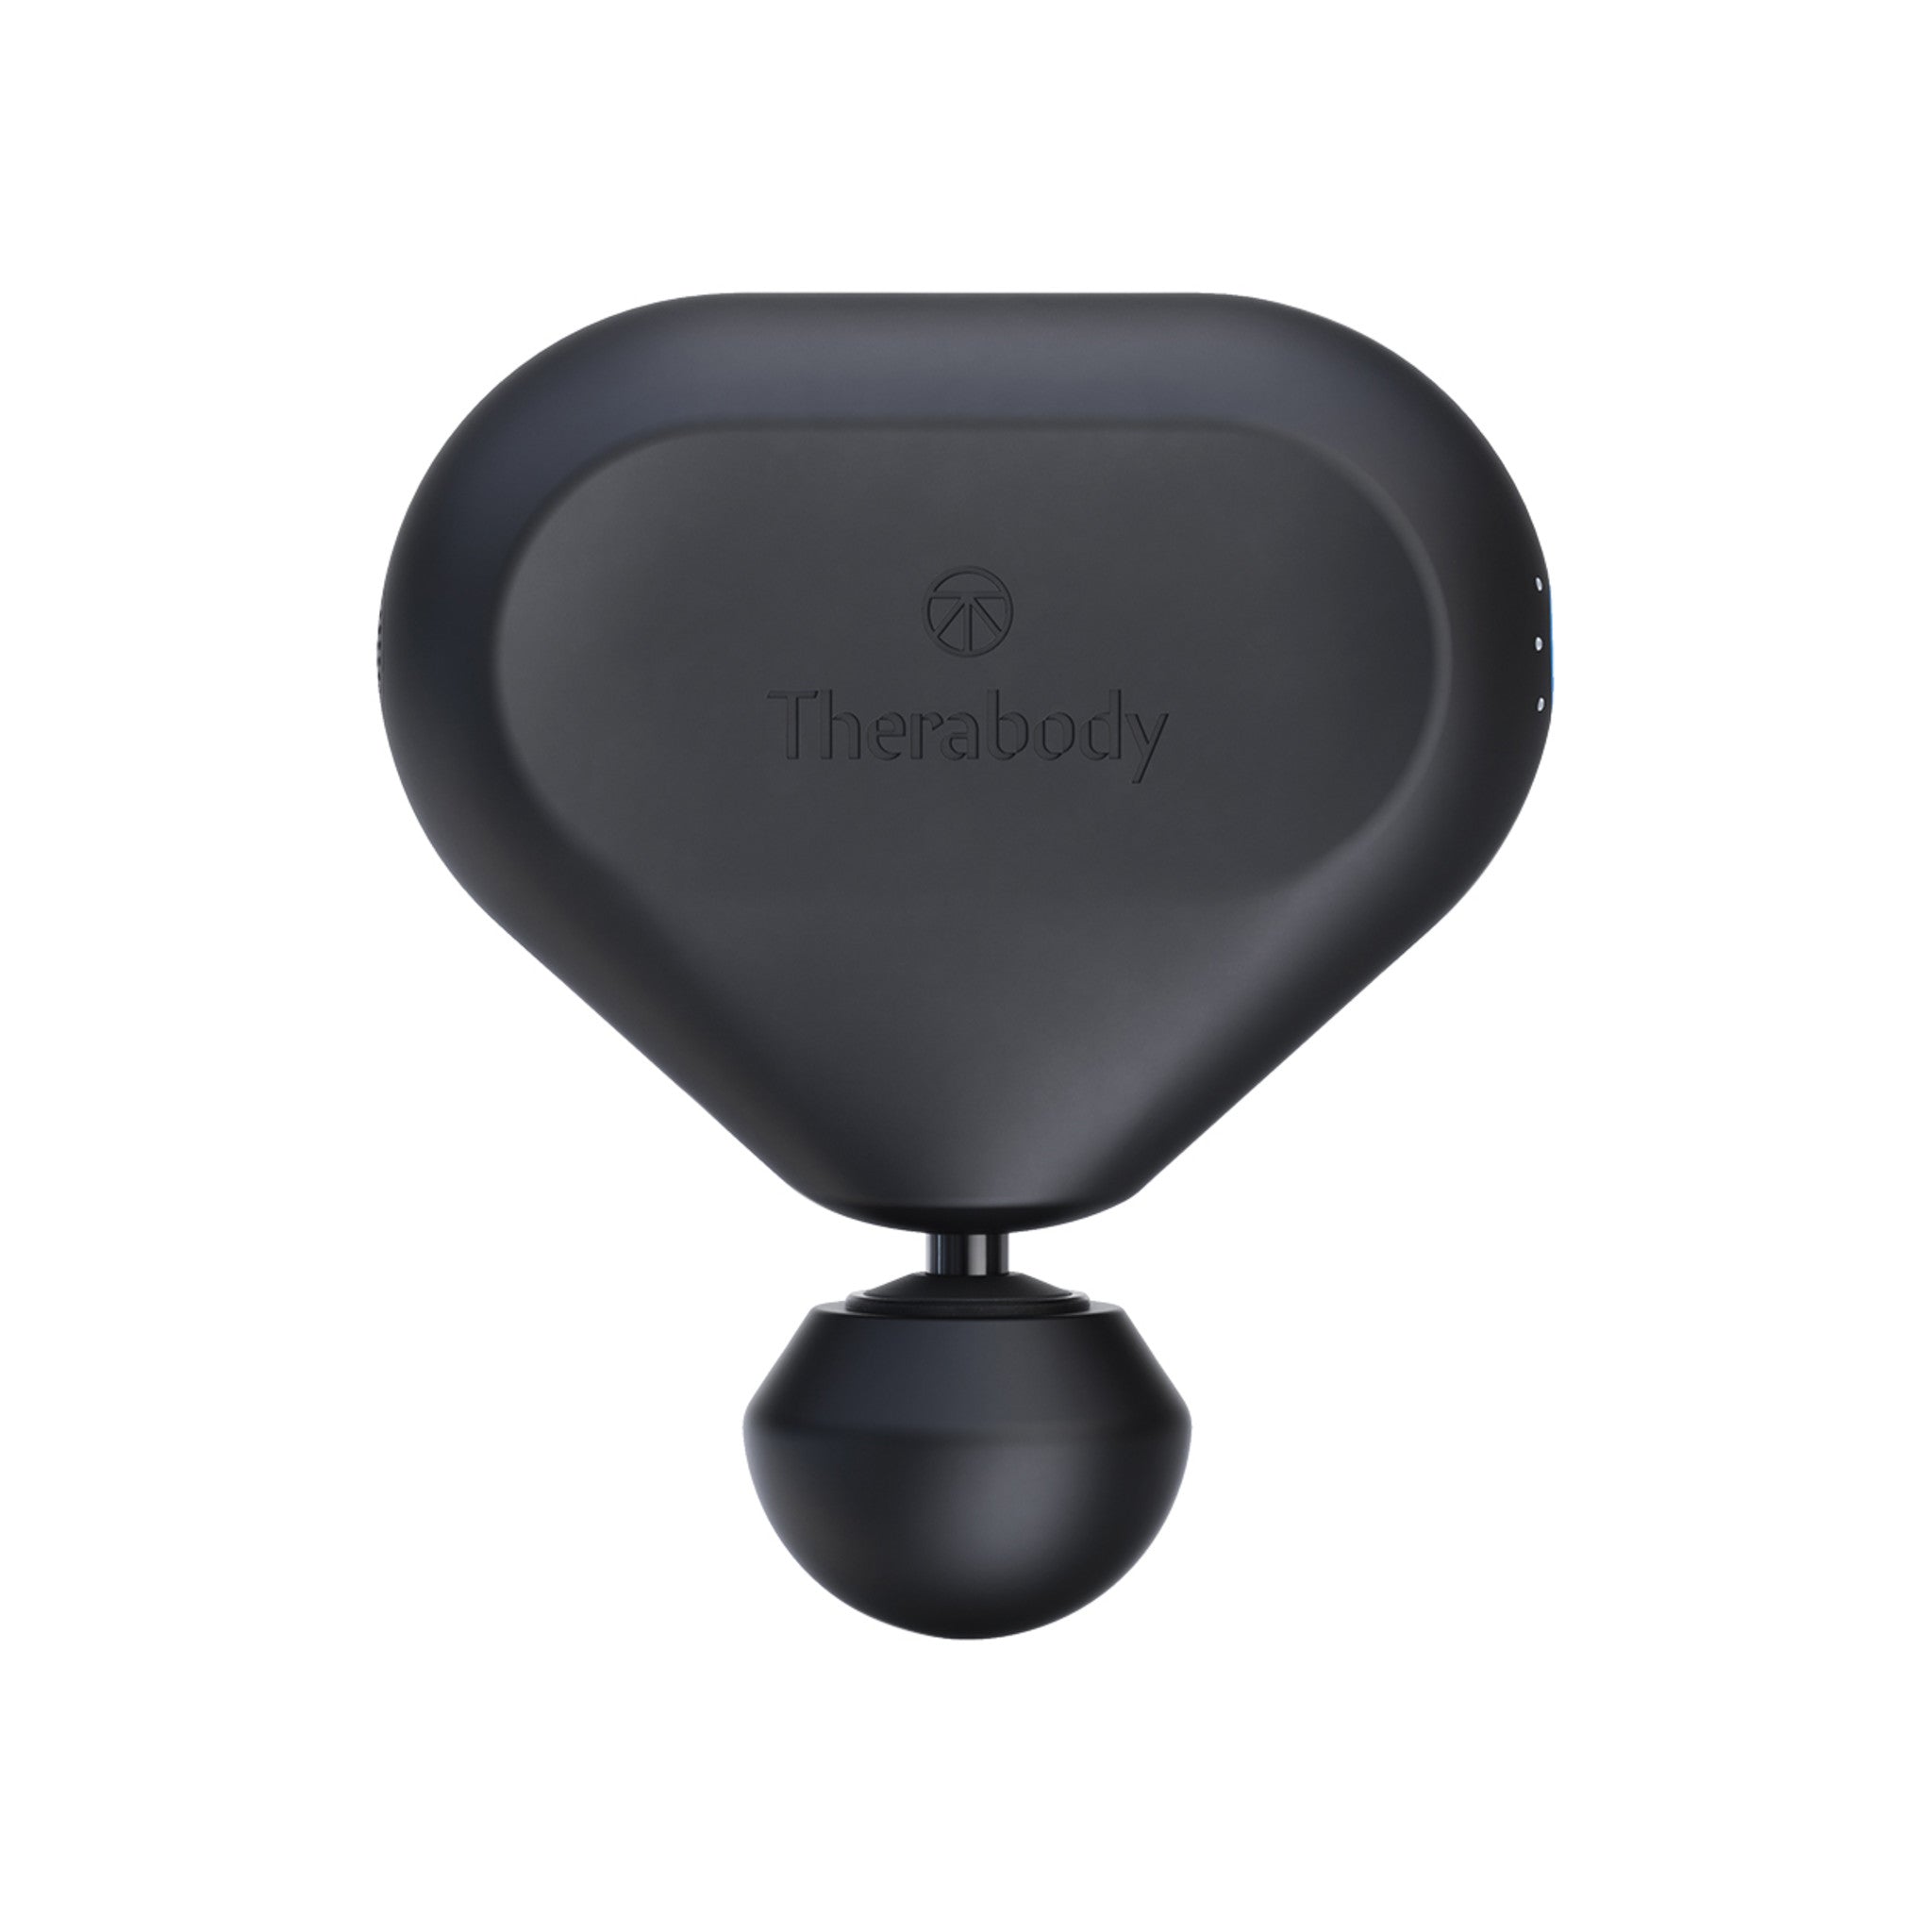 Therabody Theragun Mini (2nd Generation) Color/Shade variant: Black main image.